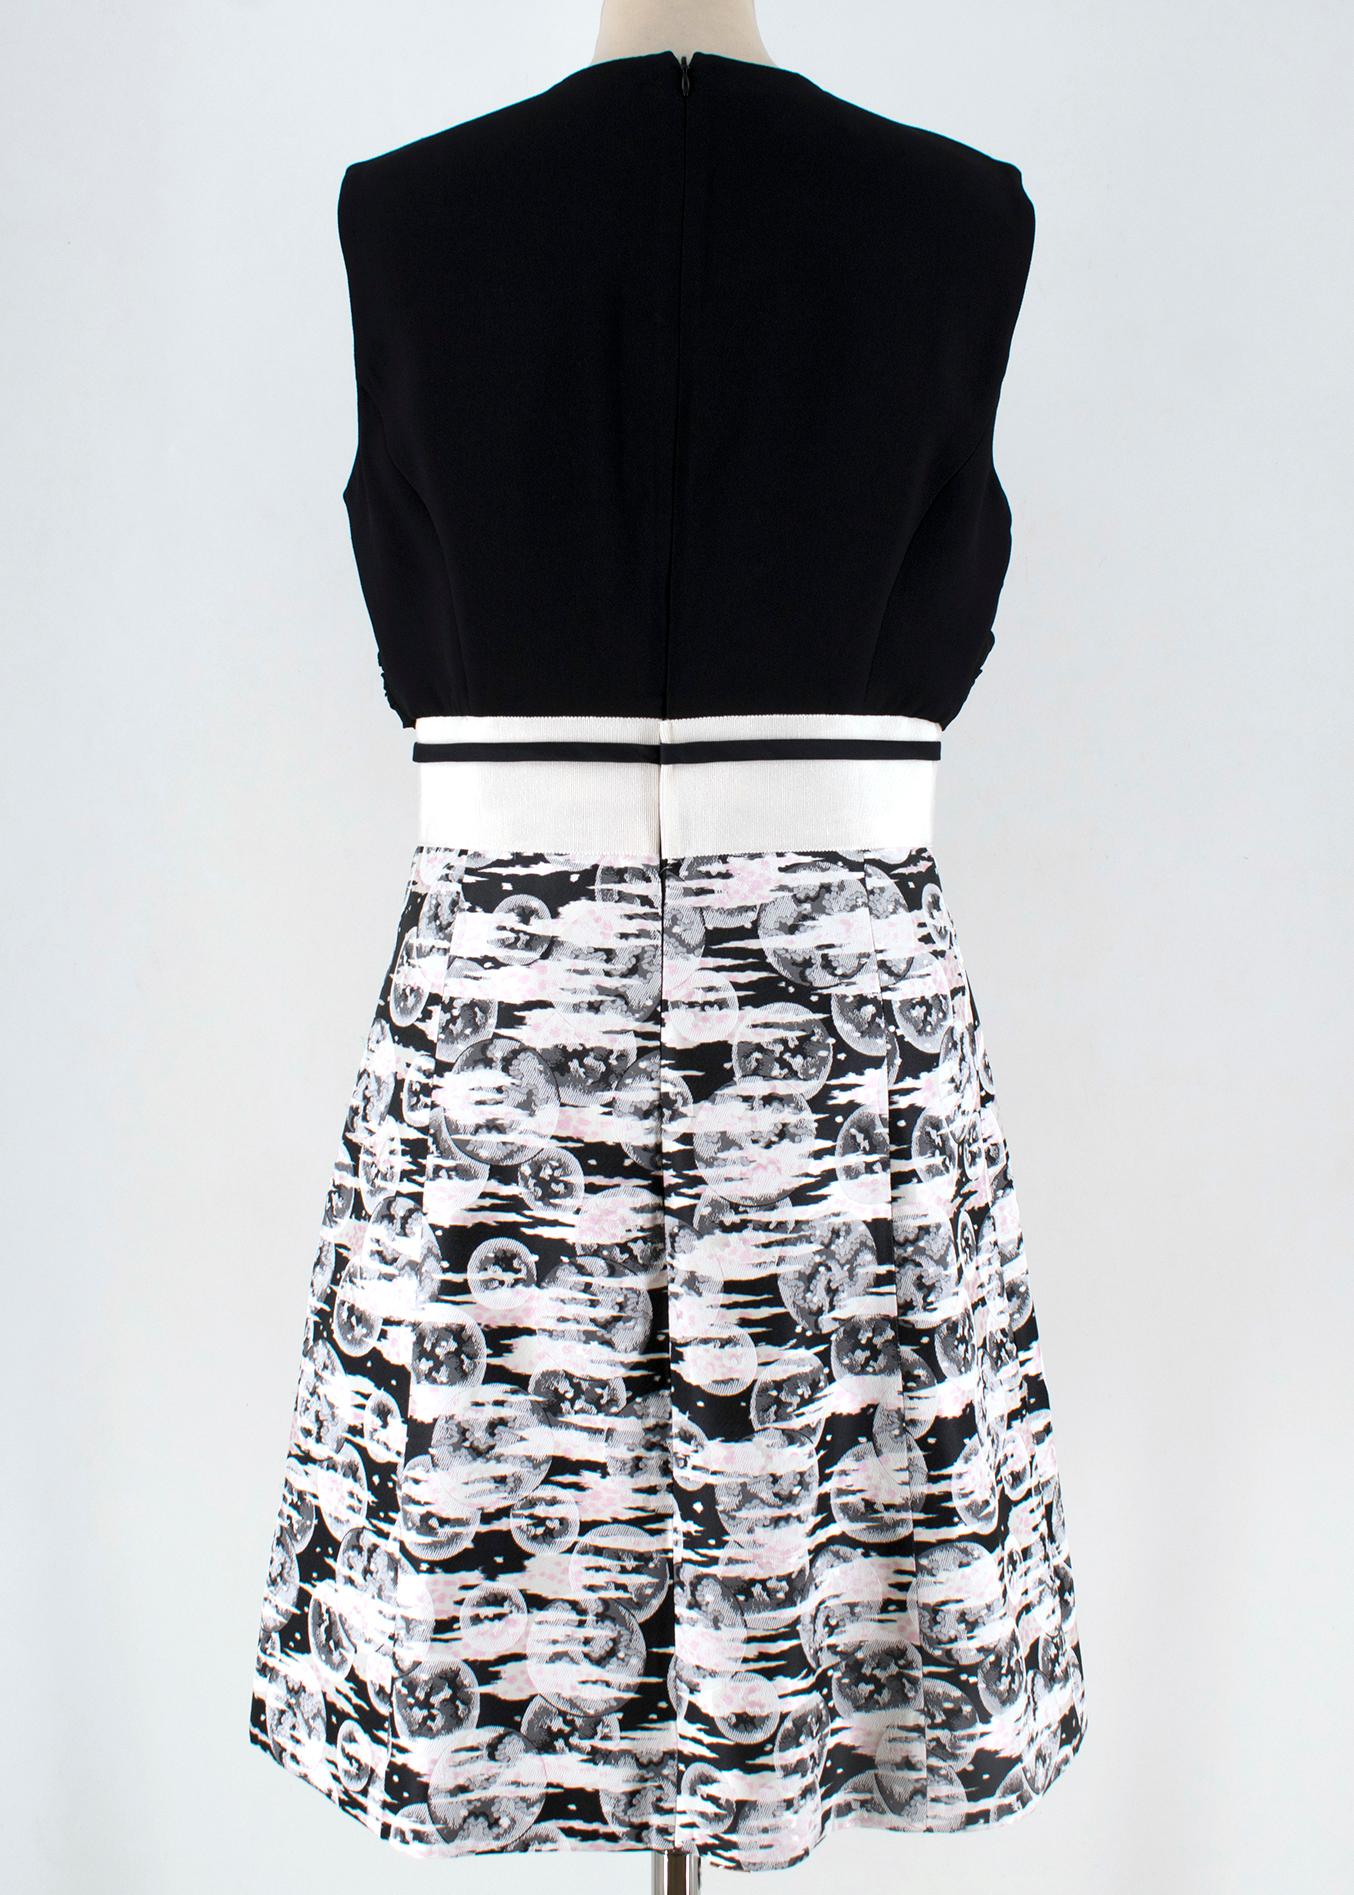 Black Giambattista Valli Monochrome Embellished Sleeveless Skater Dress - Size US 8 For Sale